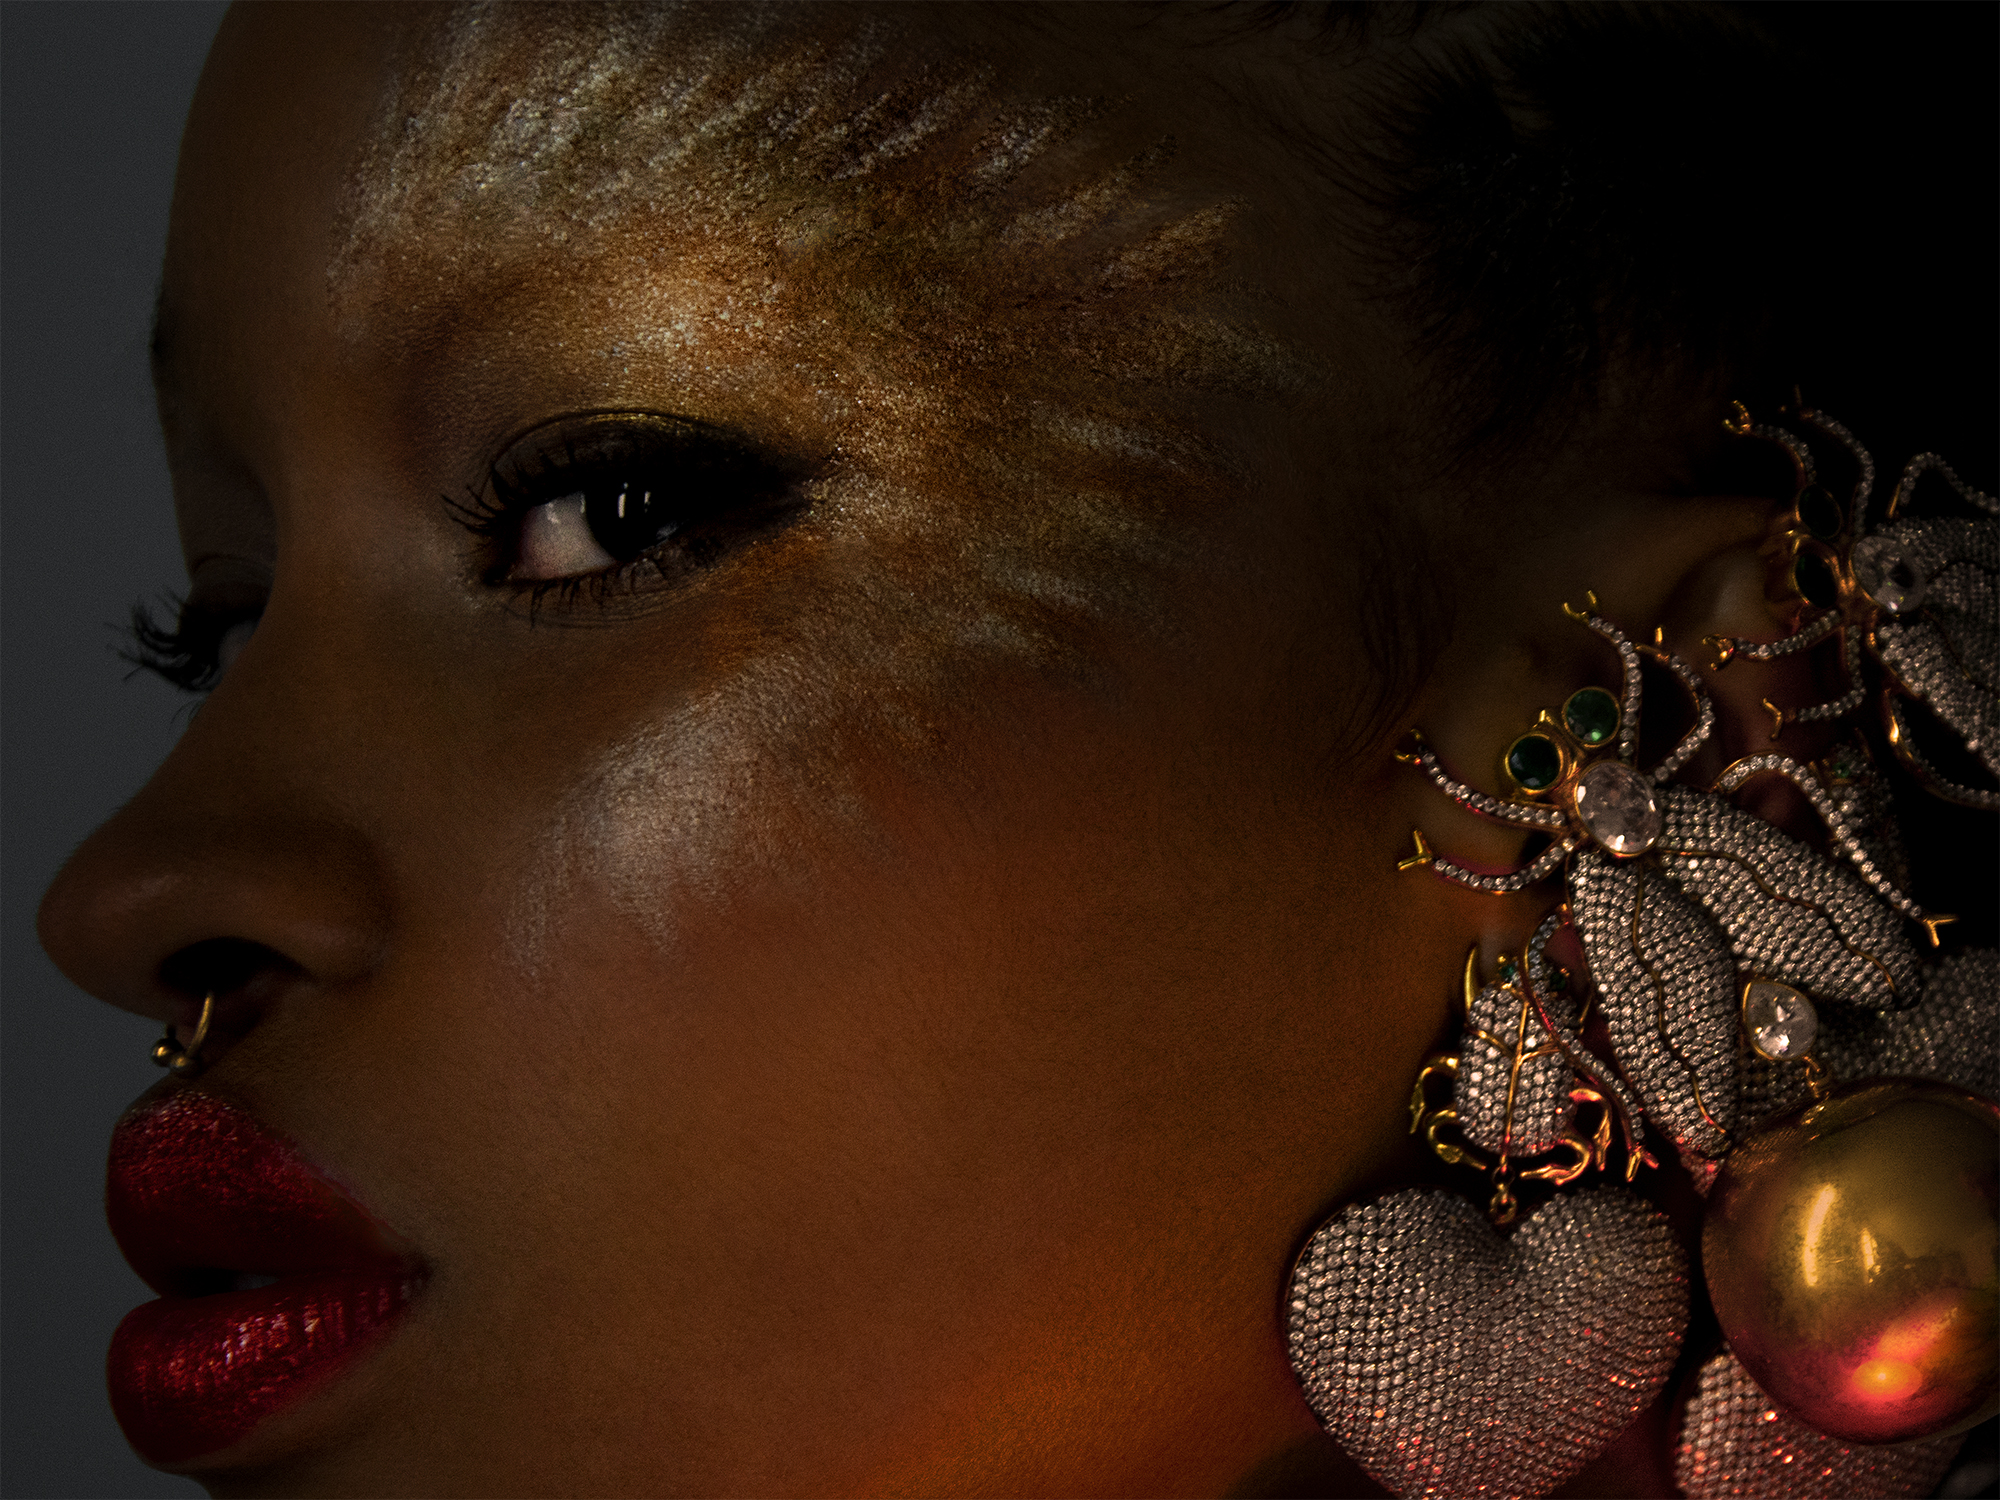 Bijoux Begüm Khan. Model Lloyce @gdfkparis. Makeup by Dior. Photo ©Buonomo & Cometti